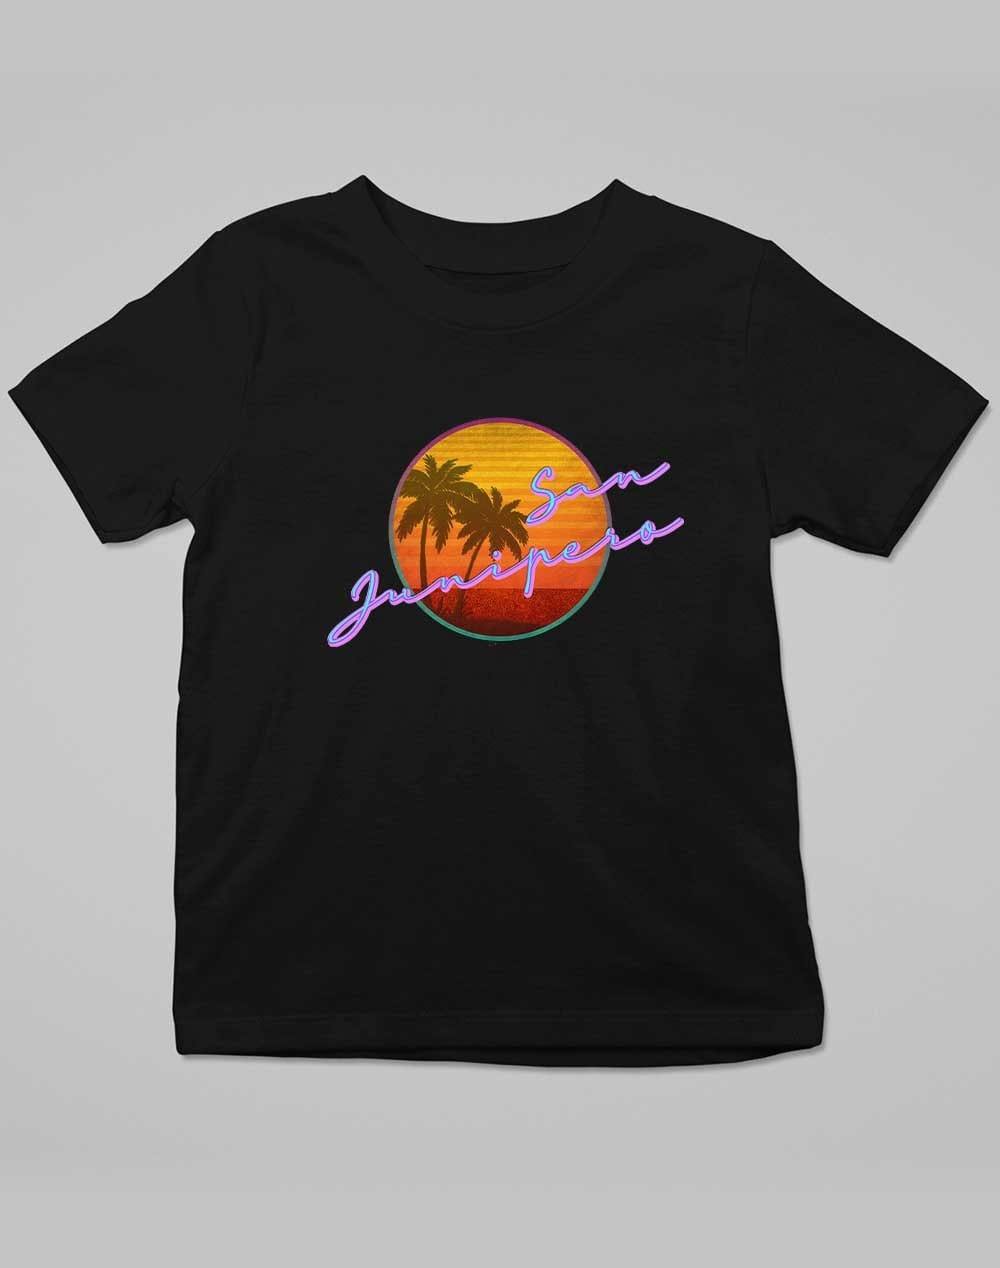 San Junipero 80s Neon Kids T-Shirt 3-4 years / Deep Black  - Off World Tees